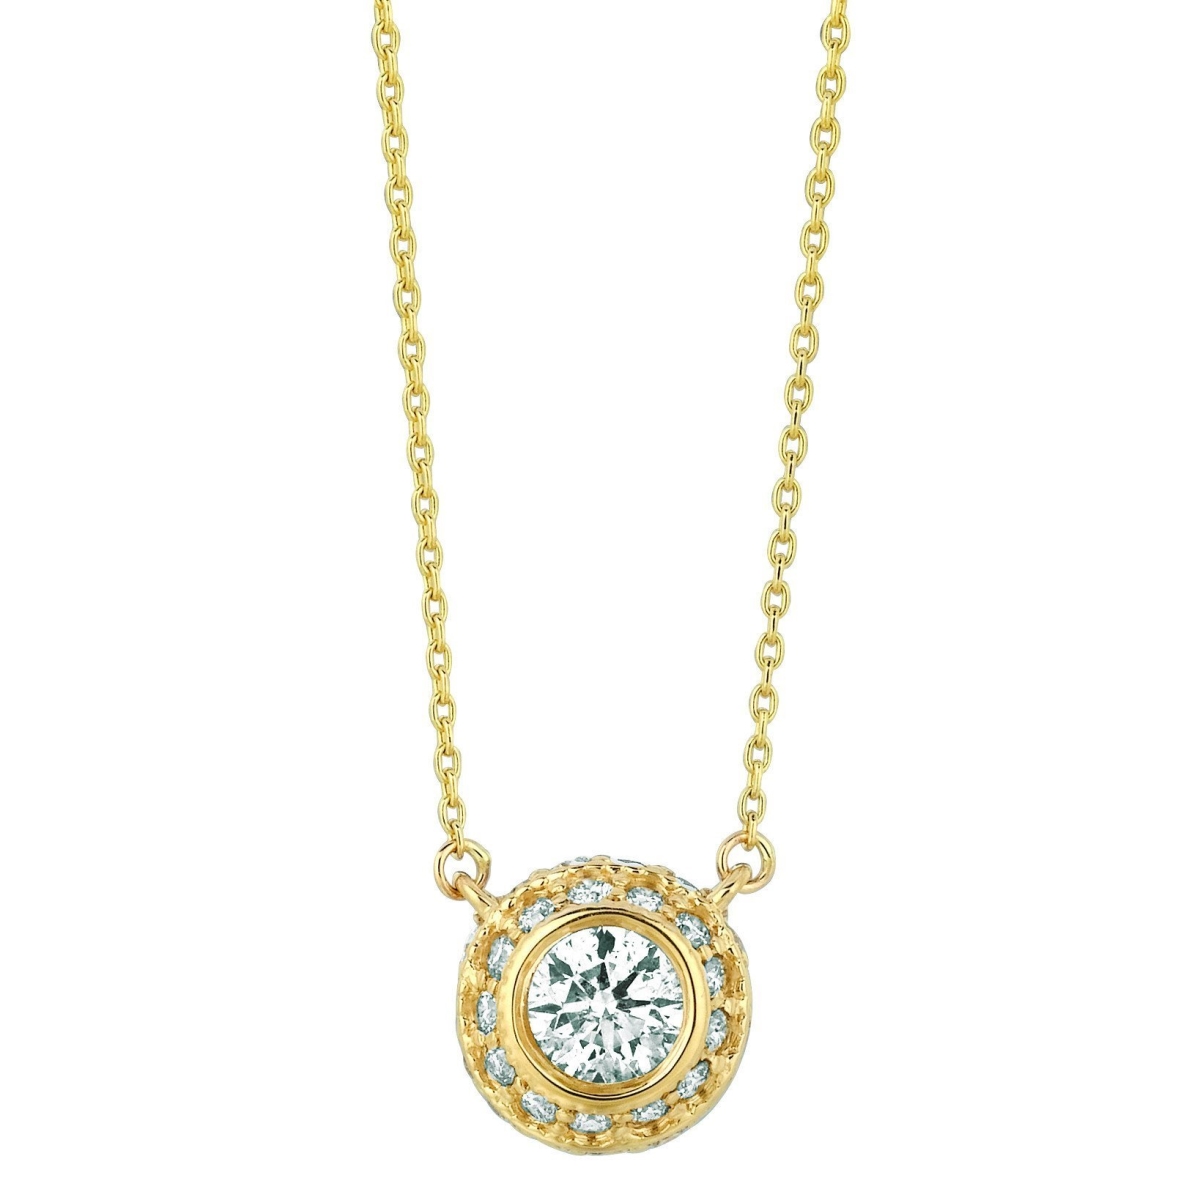 Harry Chad Enterprises 16322 1 CT Diamond Pendant Necklace - 14K Yellow